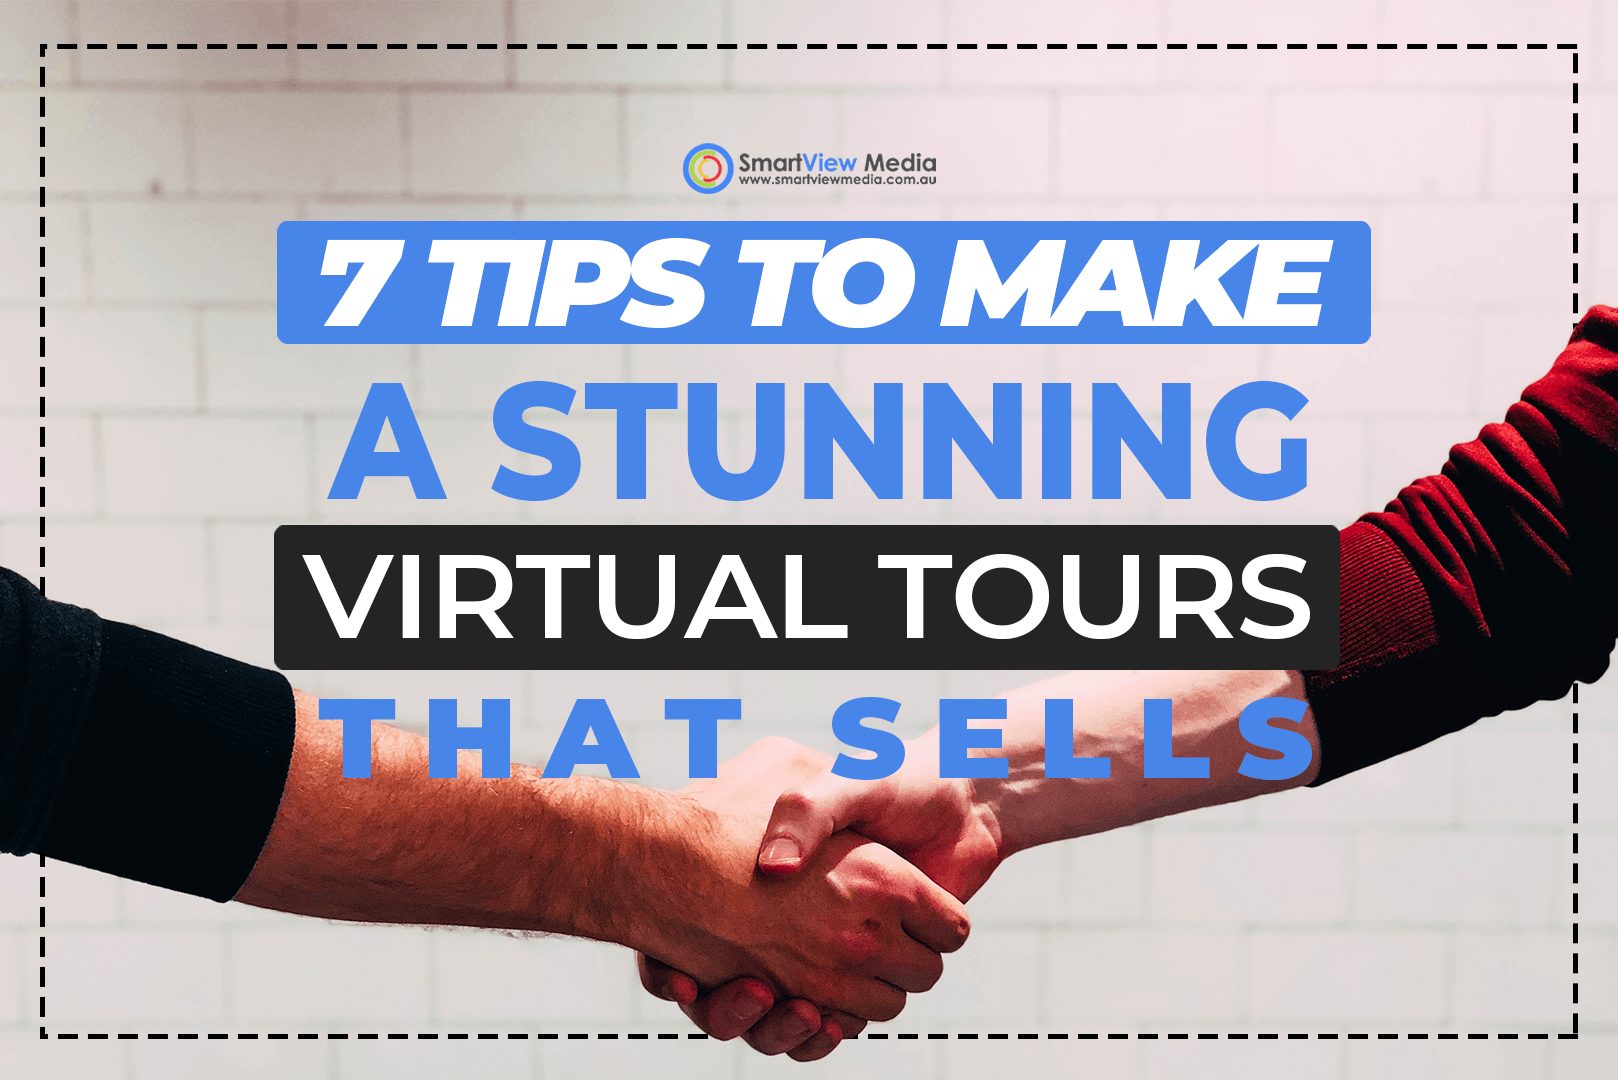 7 Tips To Make A Stunning Virtual Tour That Sells